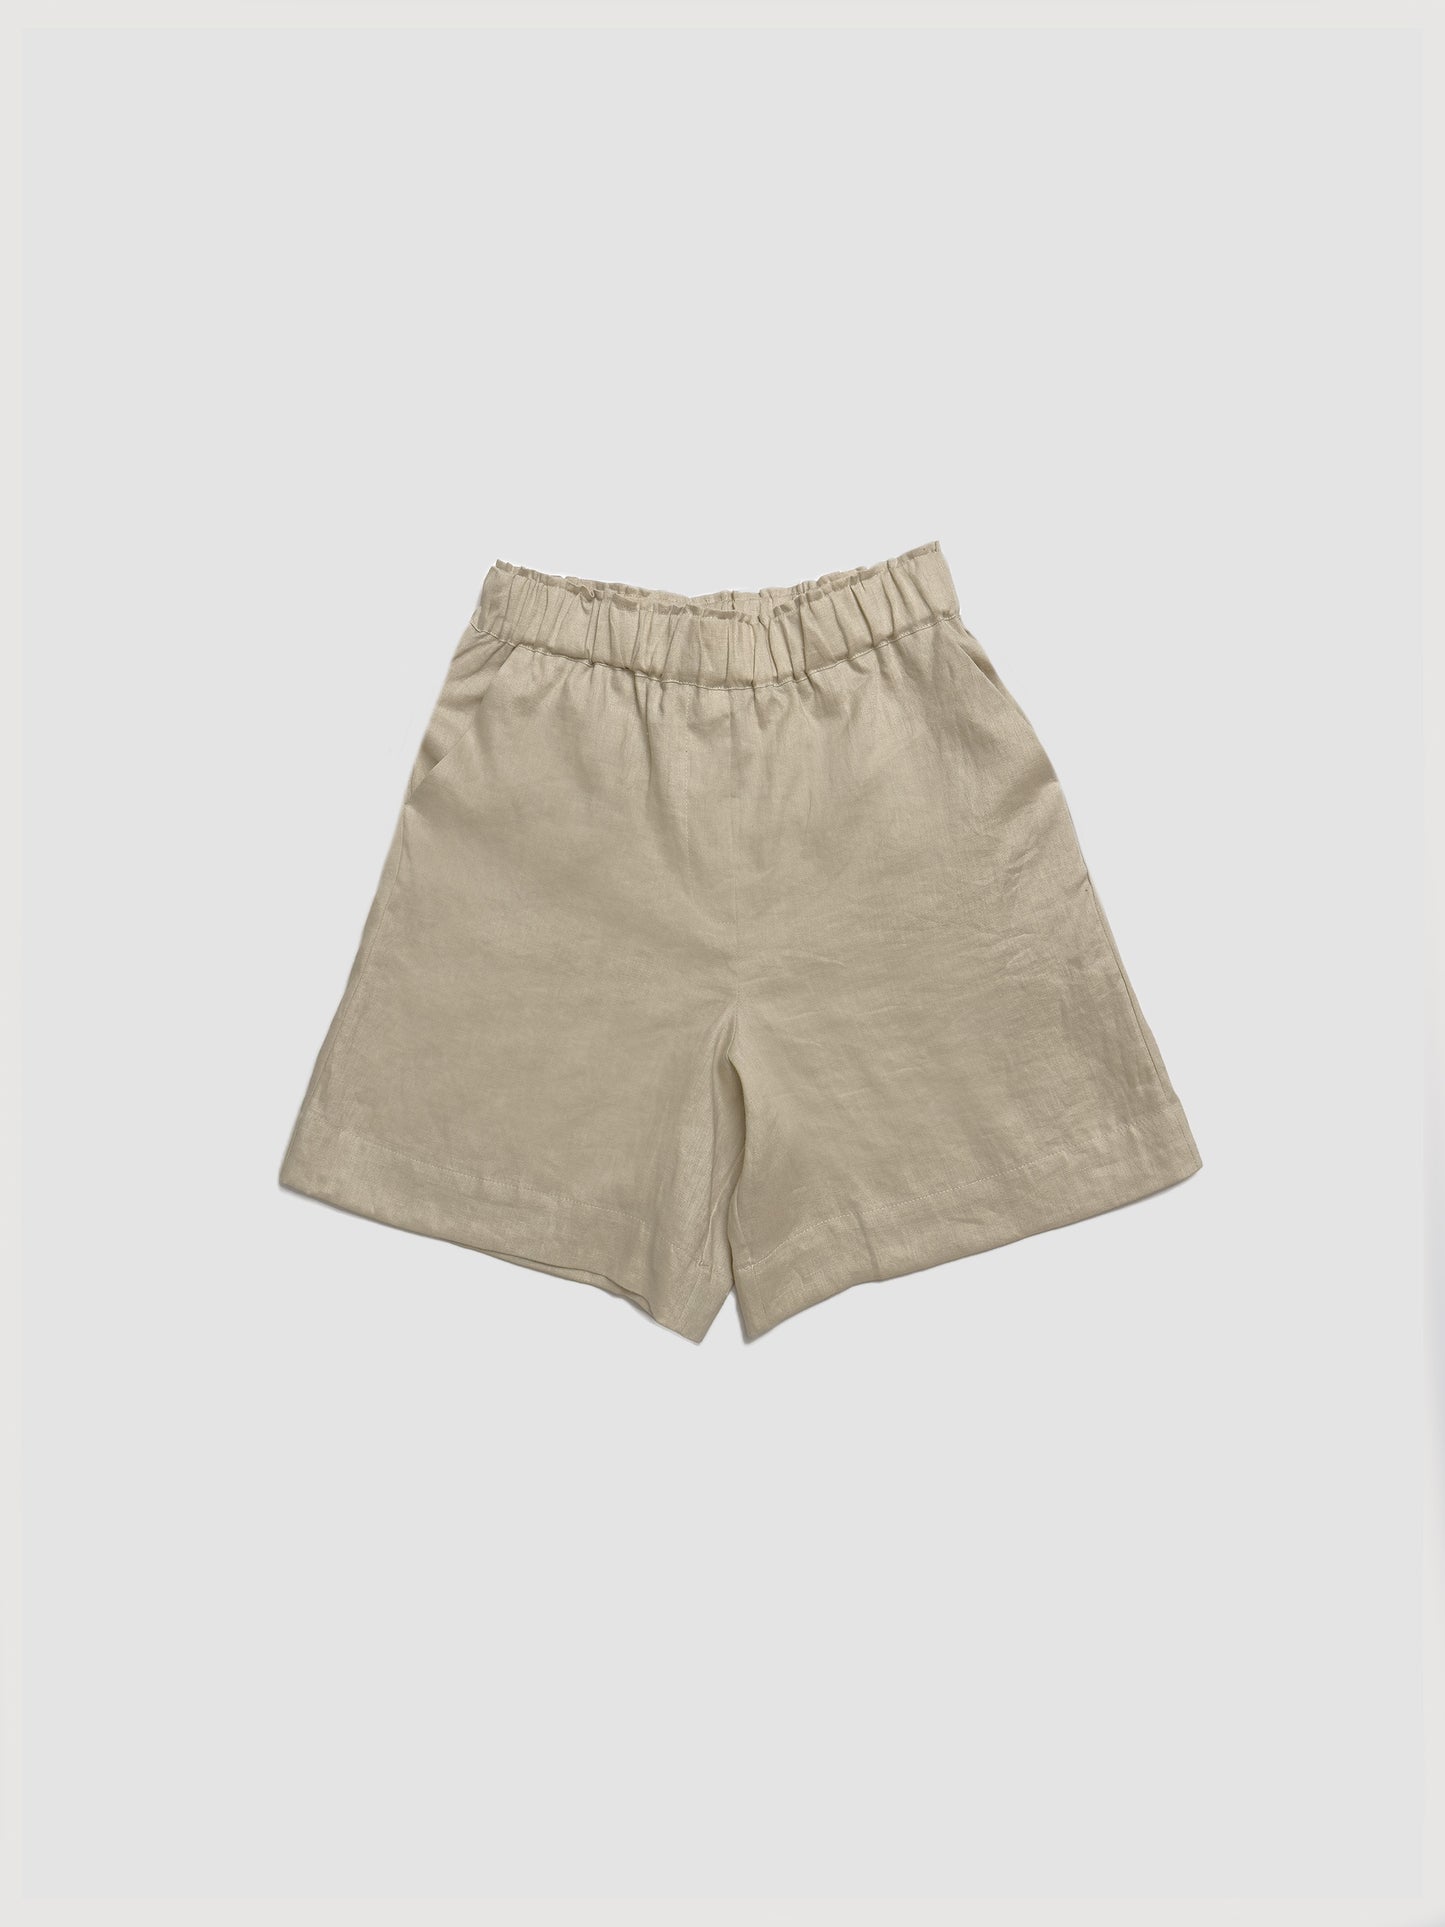 Bria Oyster Shorts